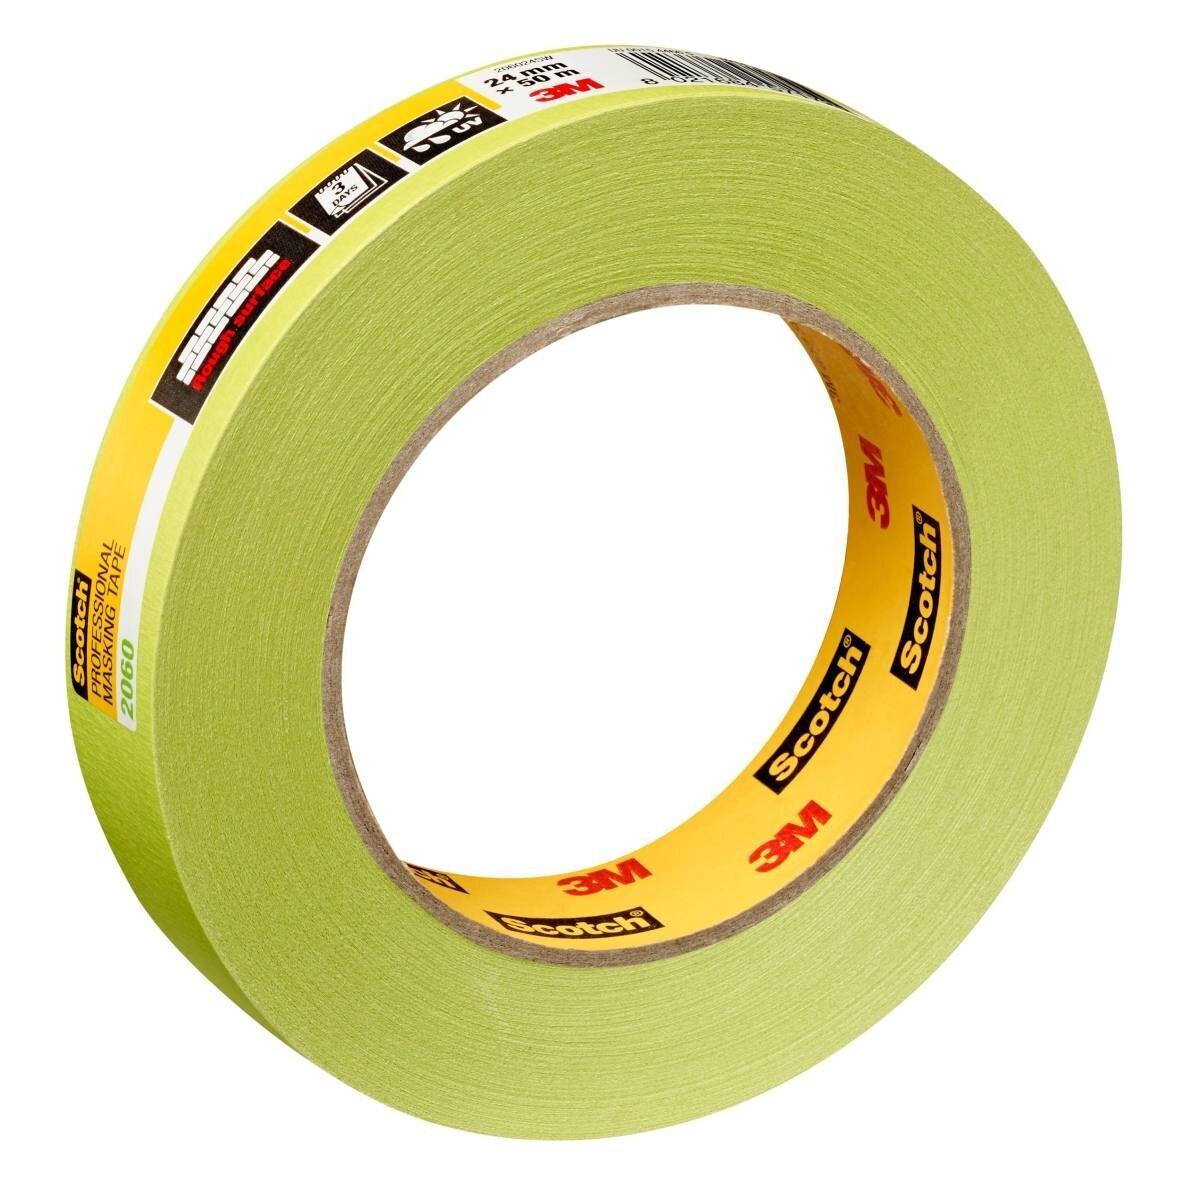 3M Crepe tape 2060, green, 24 mm x 50m, 0.150 mm